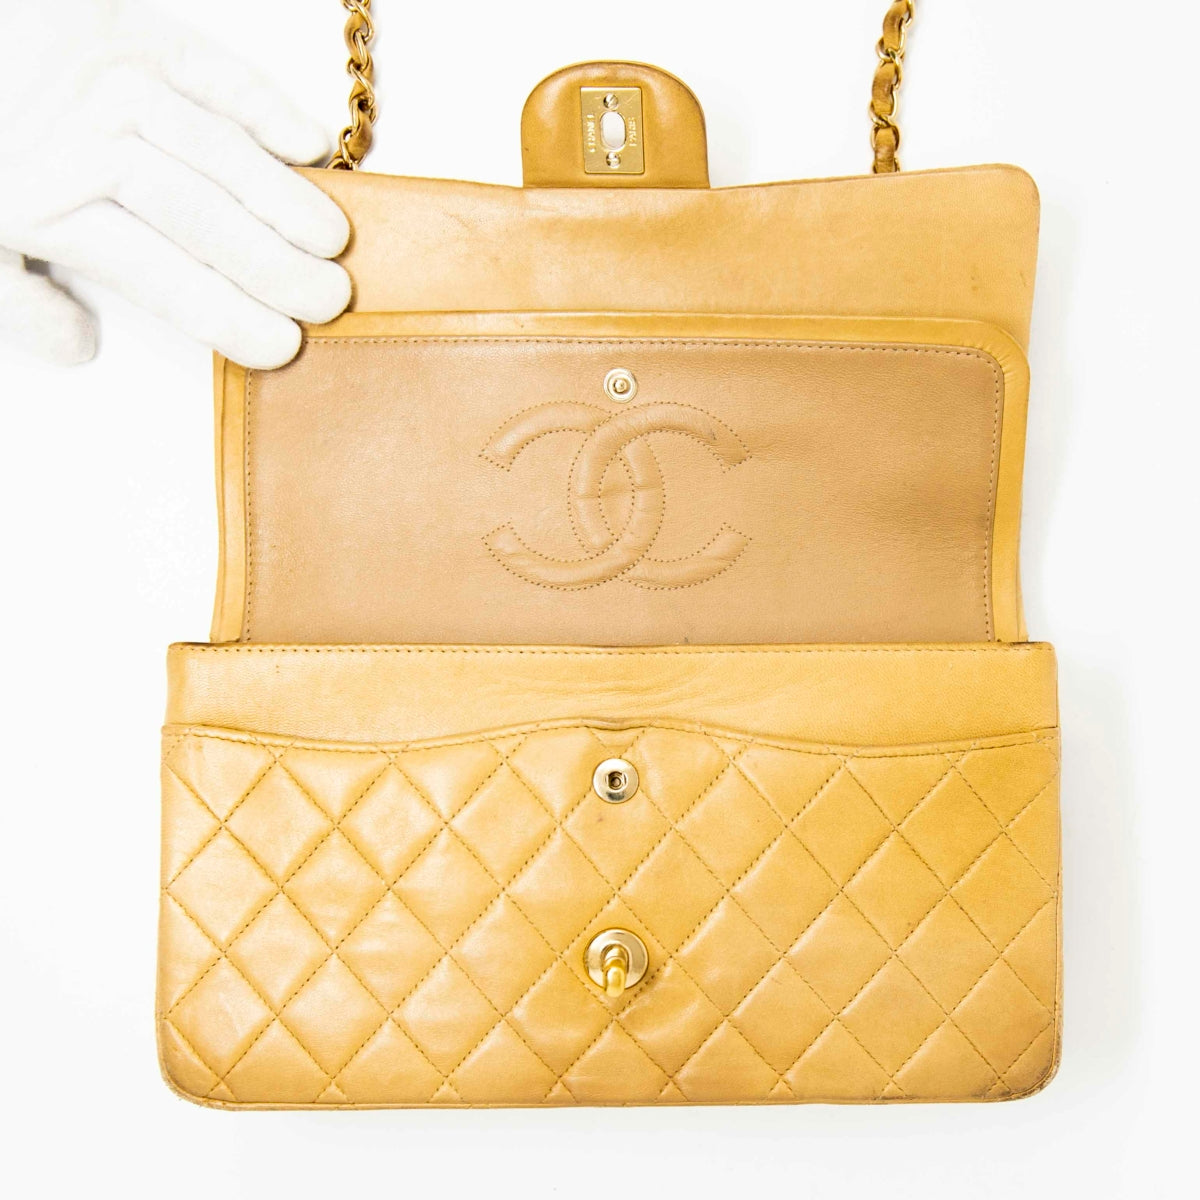 Chanel Beige Medium Vintage Classic Flap